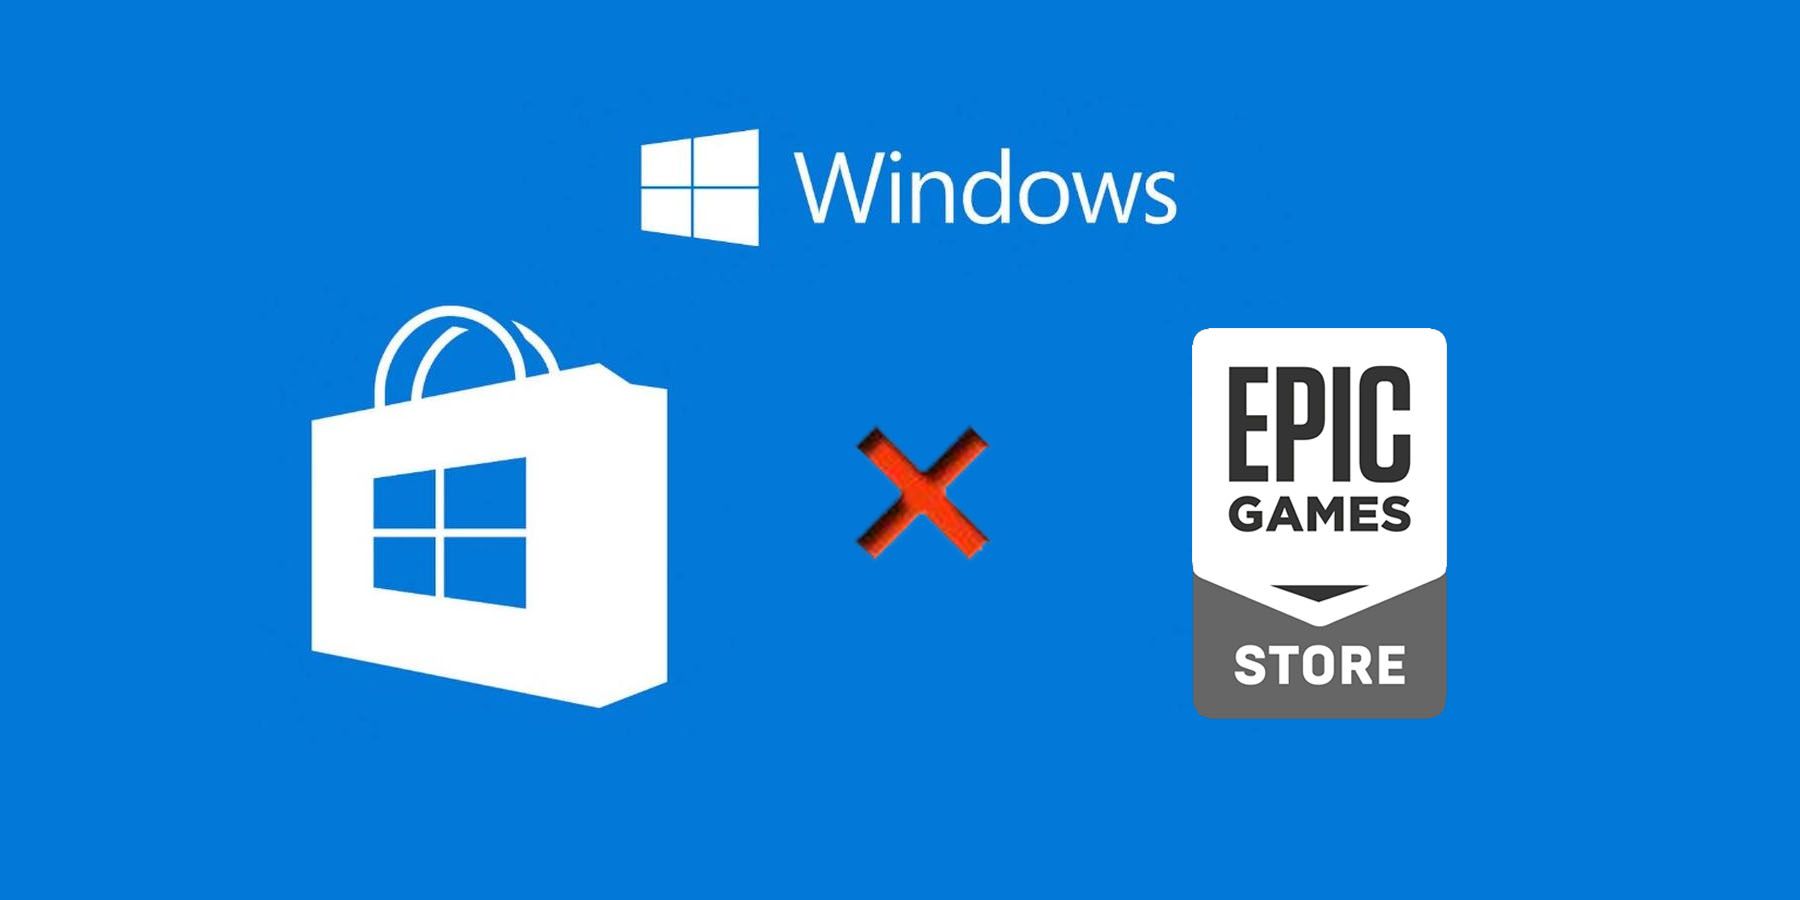 Microsoft EPic Games Store